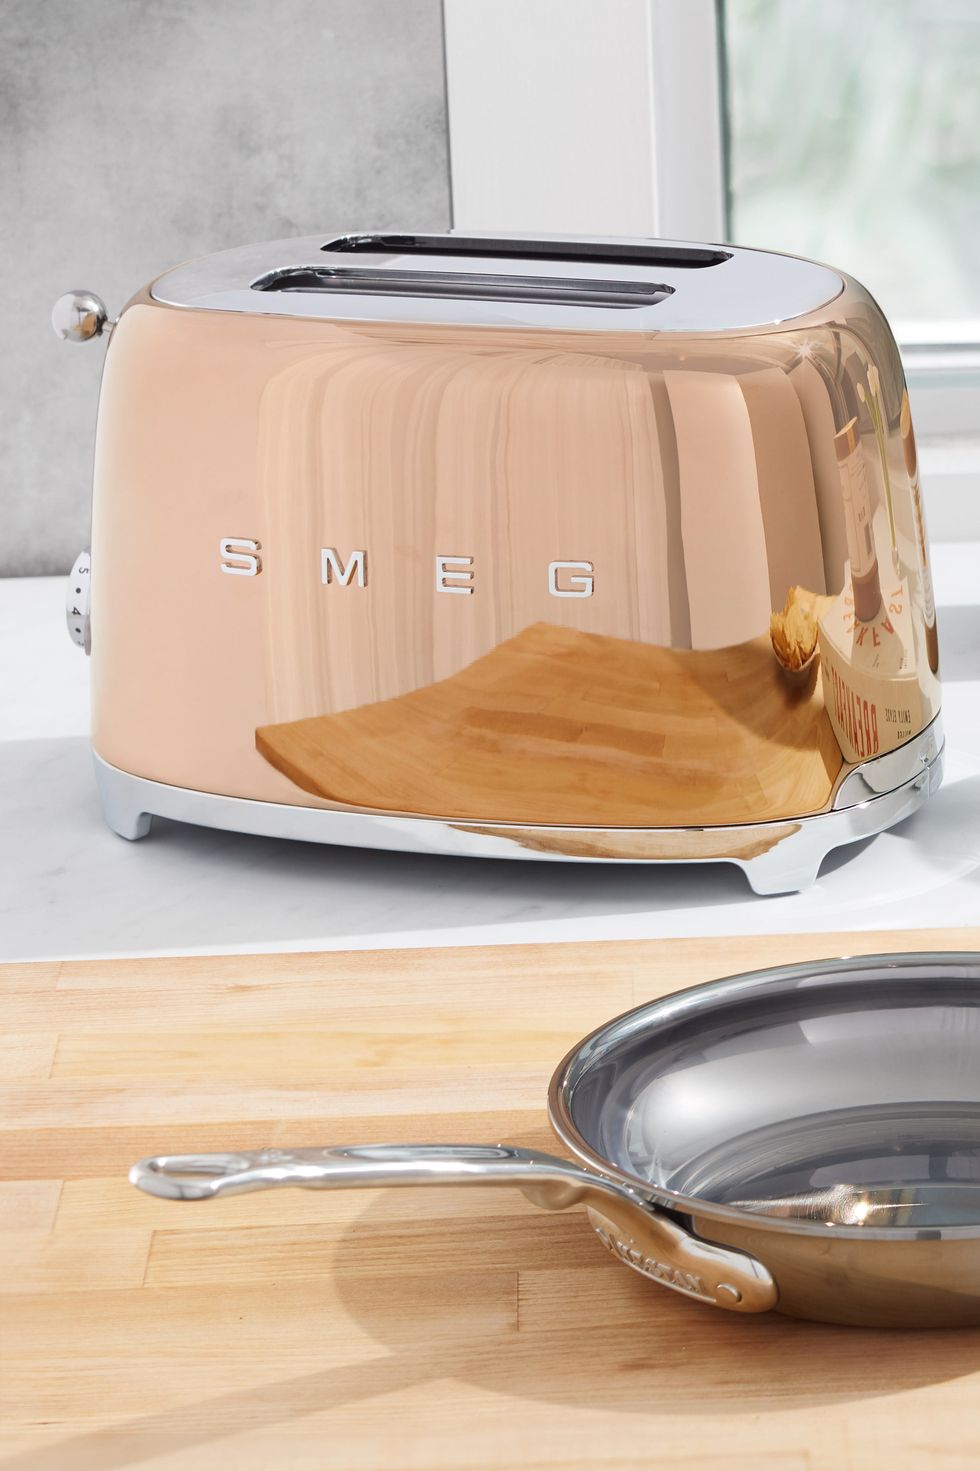 '50s Retro Style Two-Slice Toaster